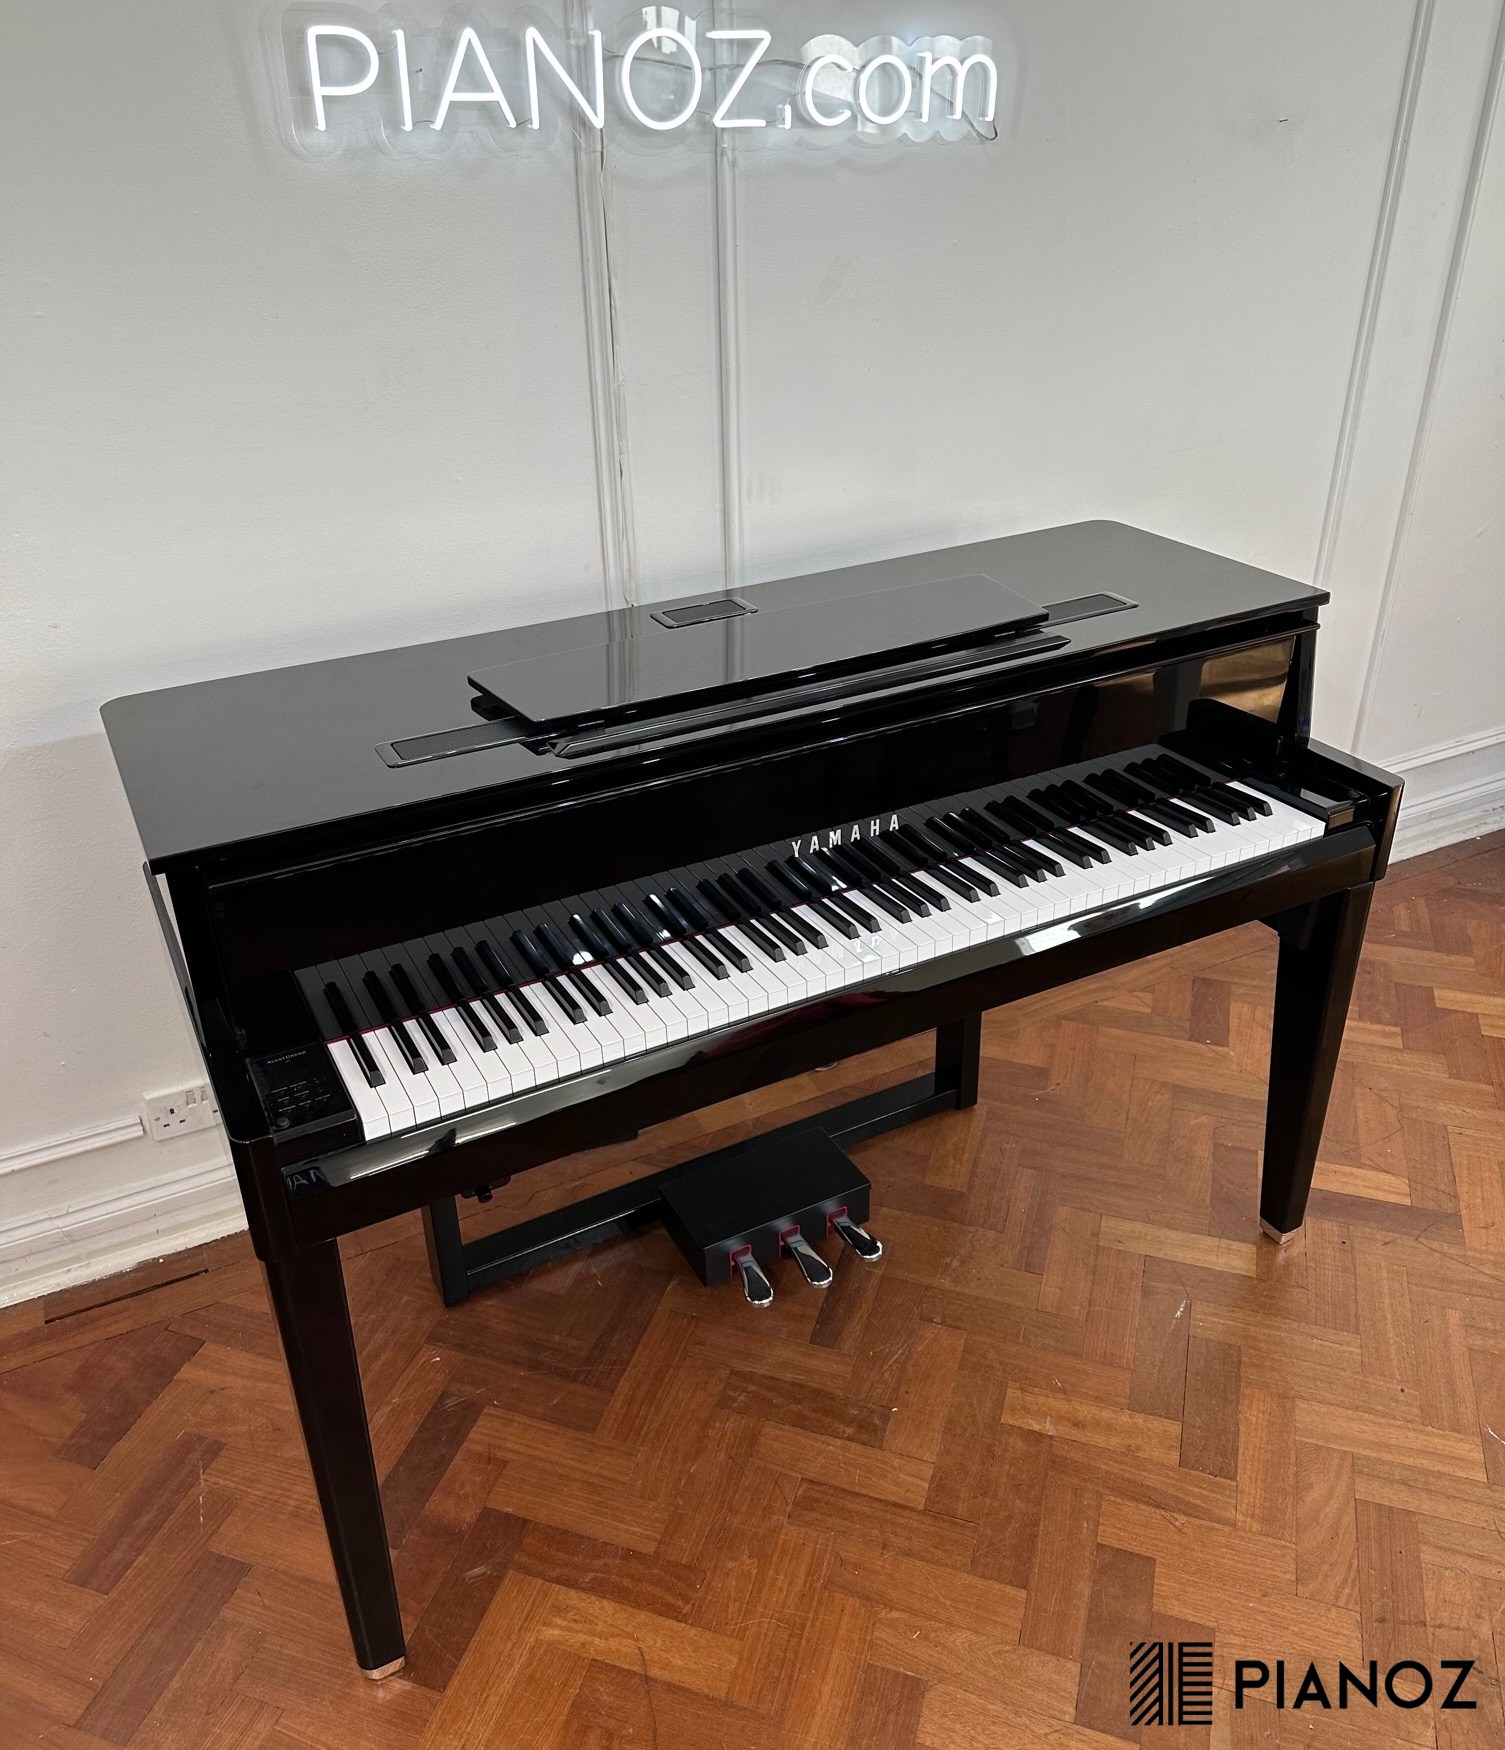 Yamaha N1 Avantgrand Digital Piano for sale UK | P I A N O Z - The Ultimate  Online Piano Showroom - UK Piano Shop - Black Baby Grands